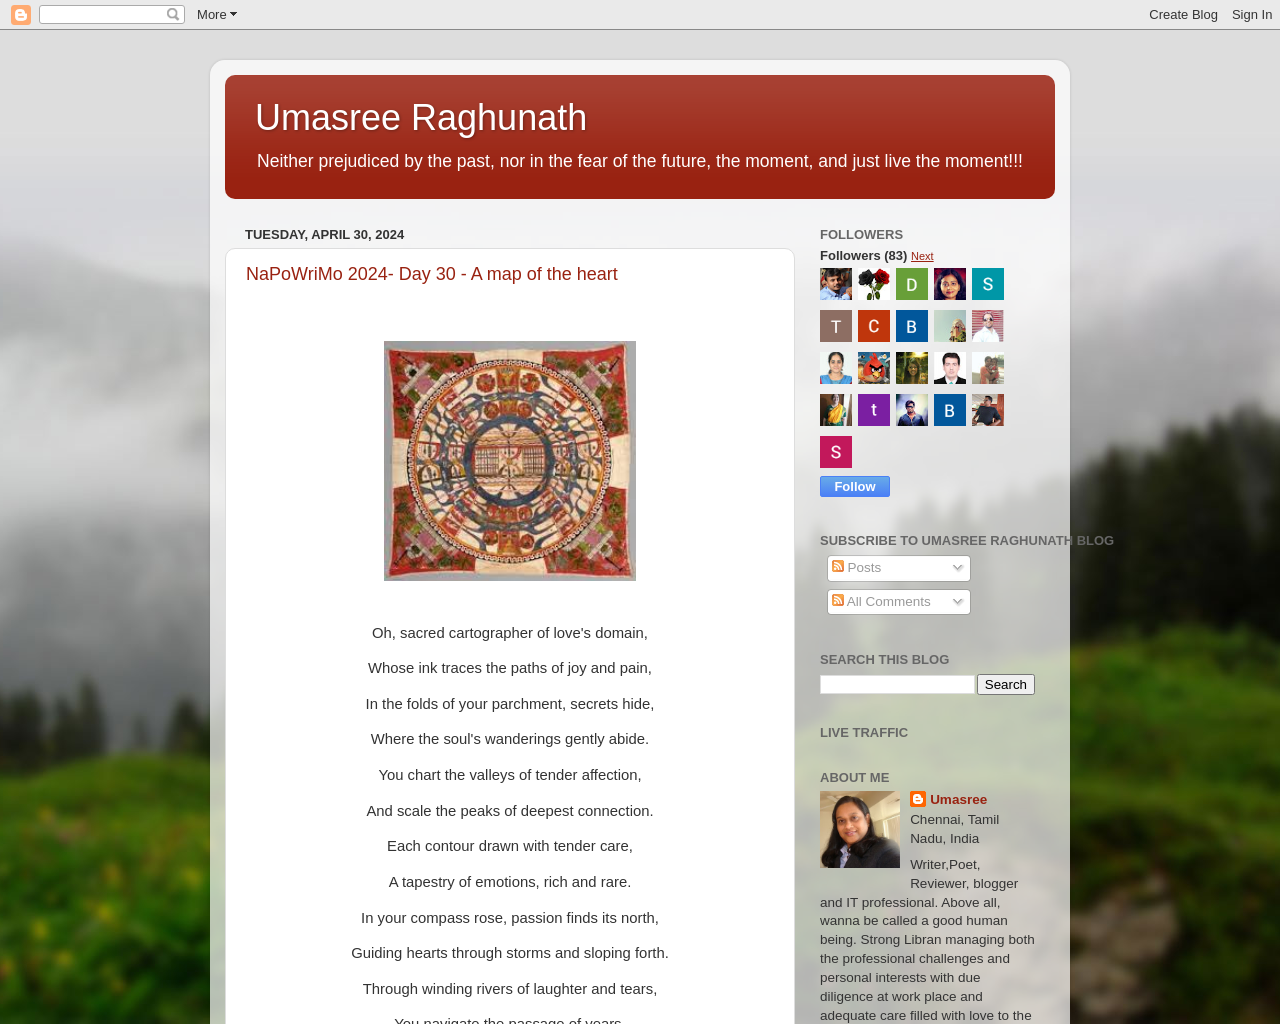 www.umasreeraghunath.blogspot.com